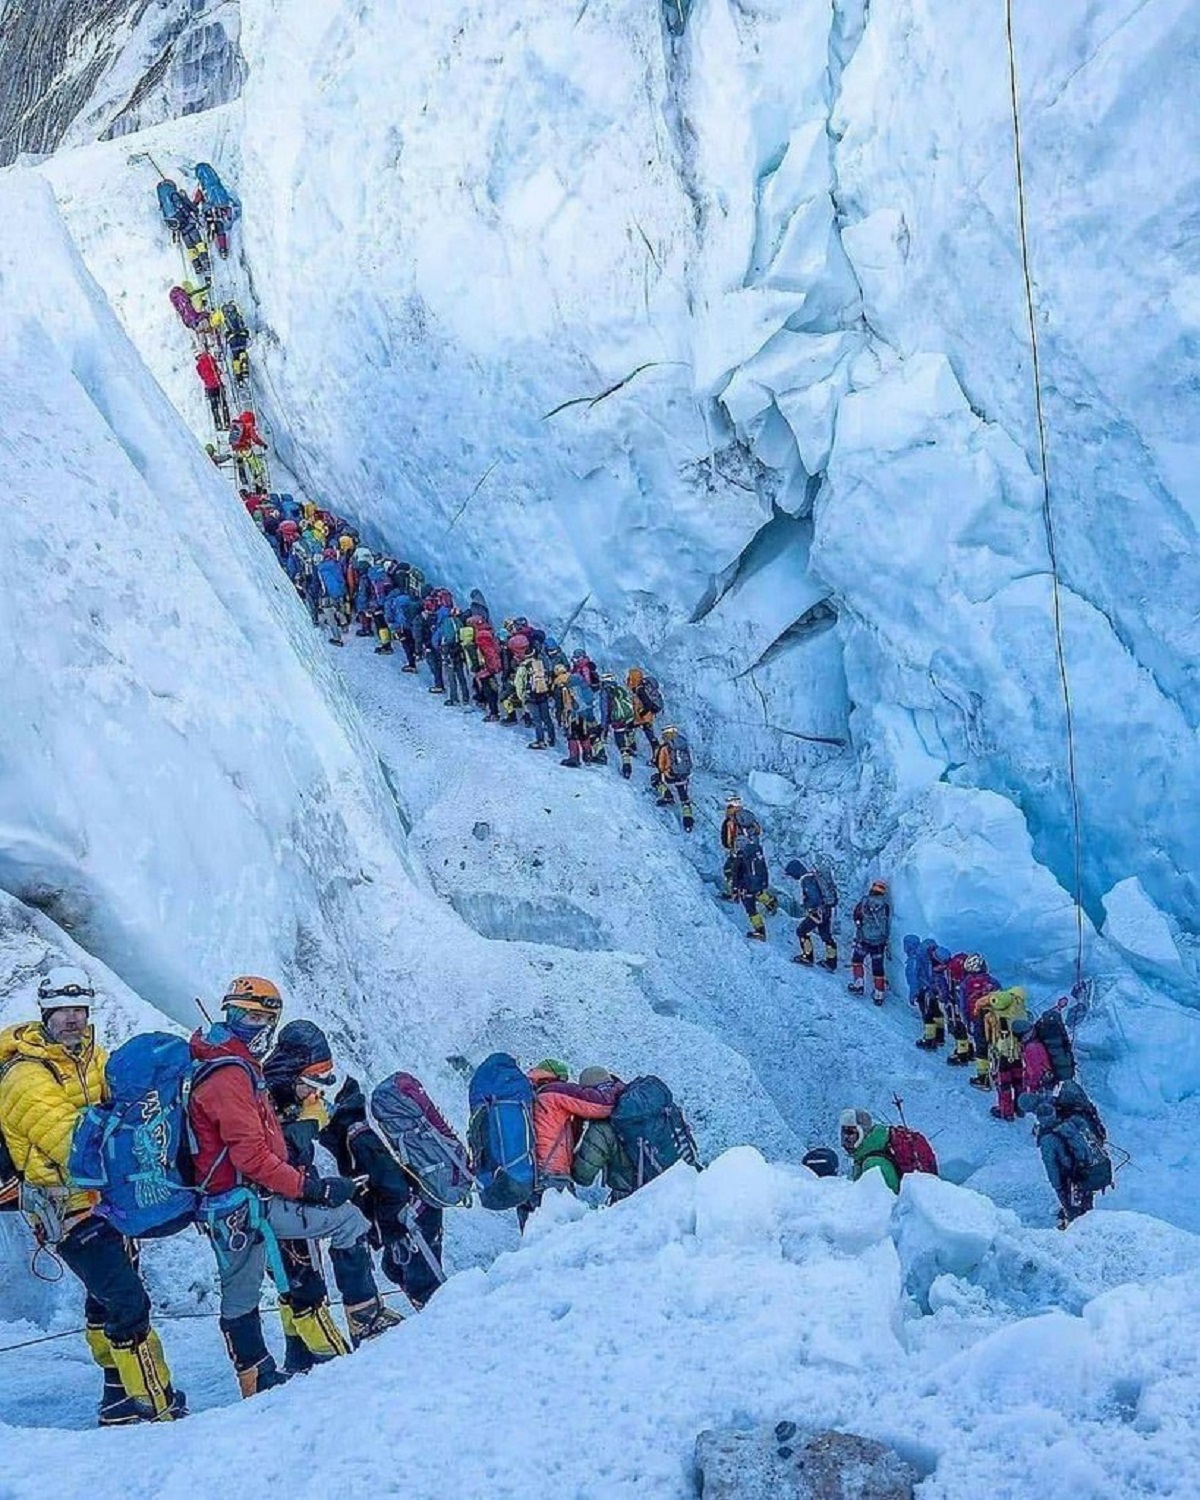 Climbing mount Everest : the queue at Khumbu icefall